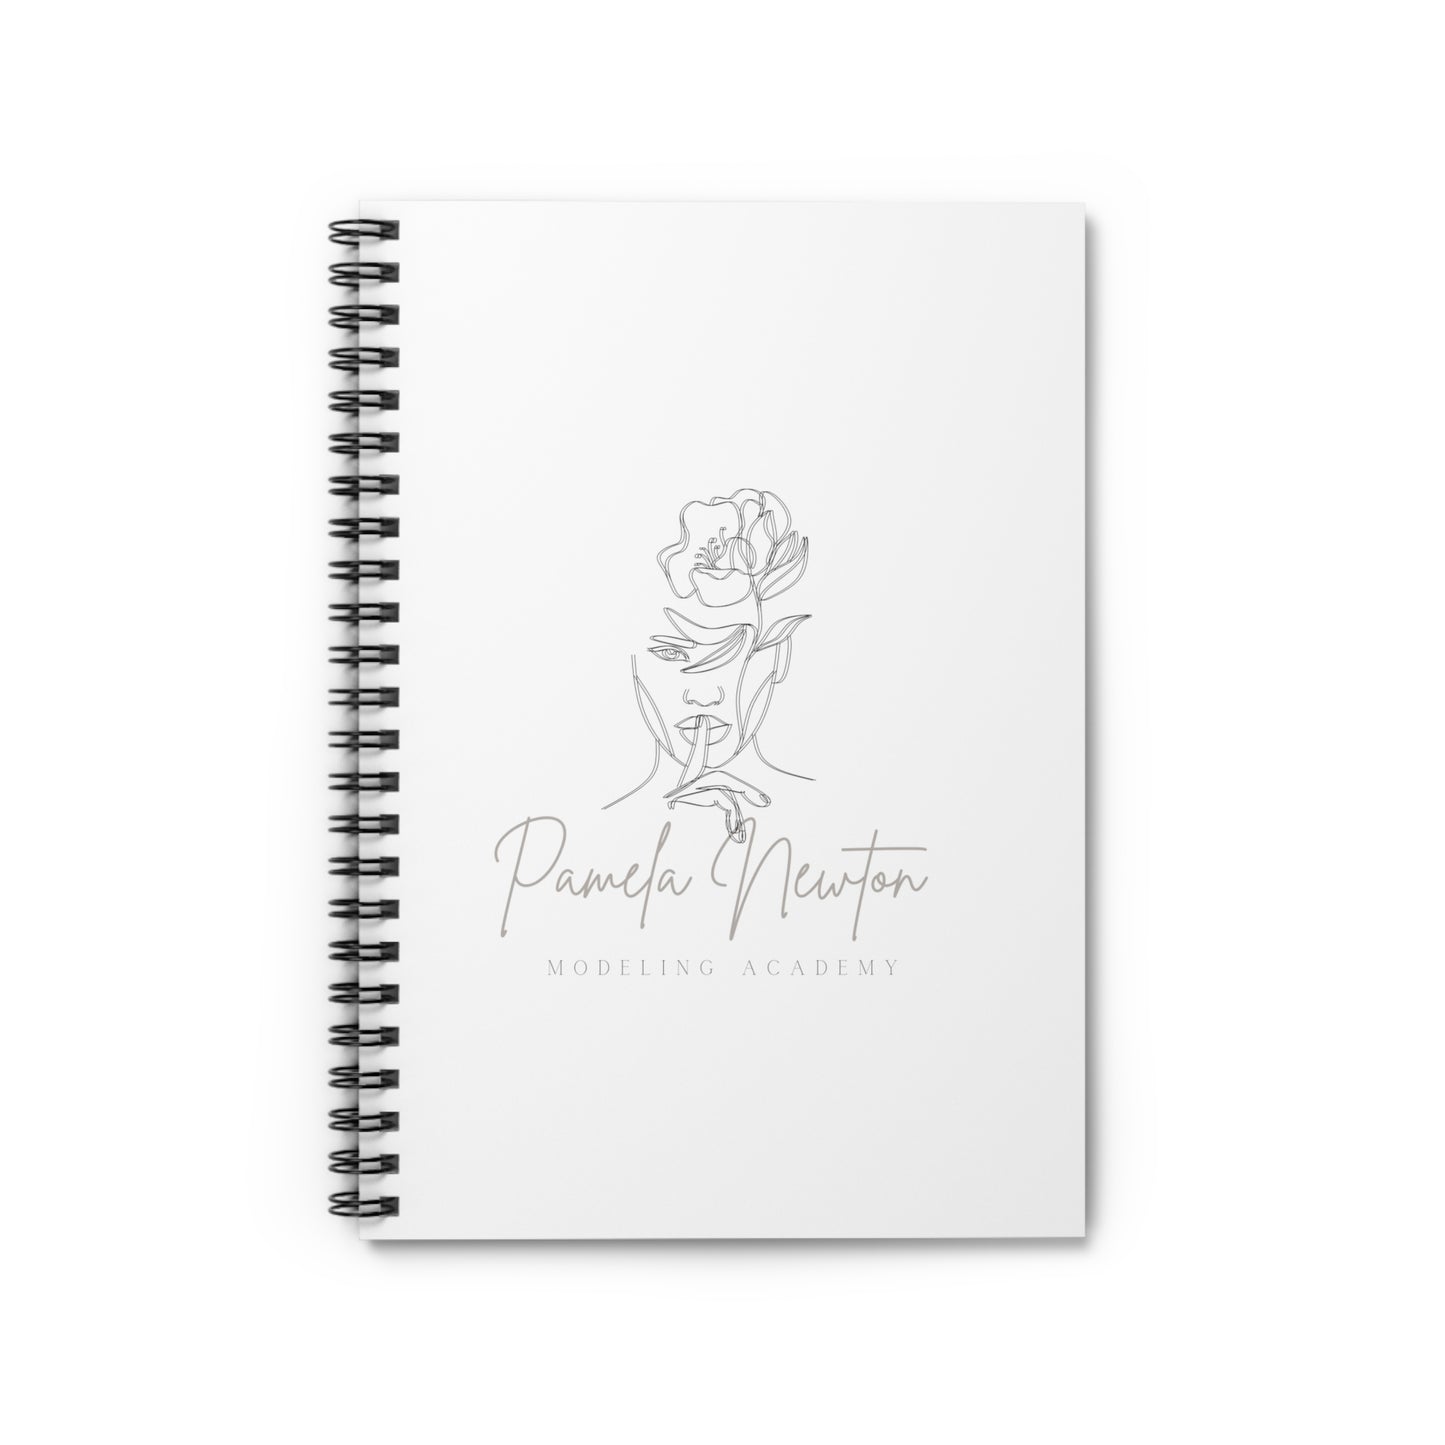 Pamela Newton Modeling Academy Spiral Notebook - Ruled Line